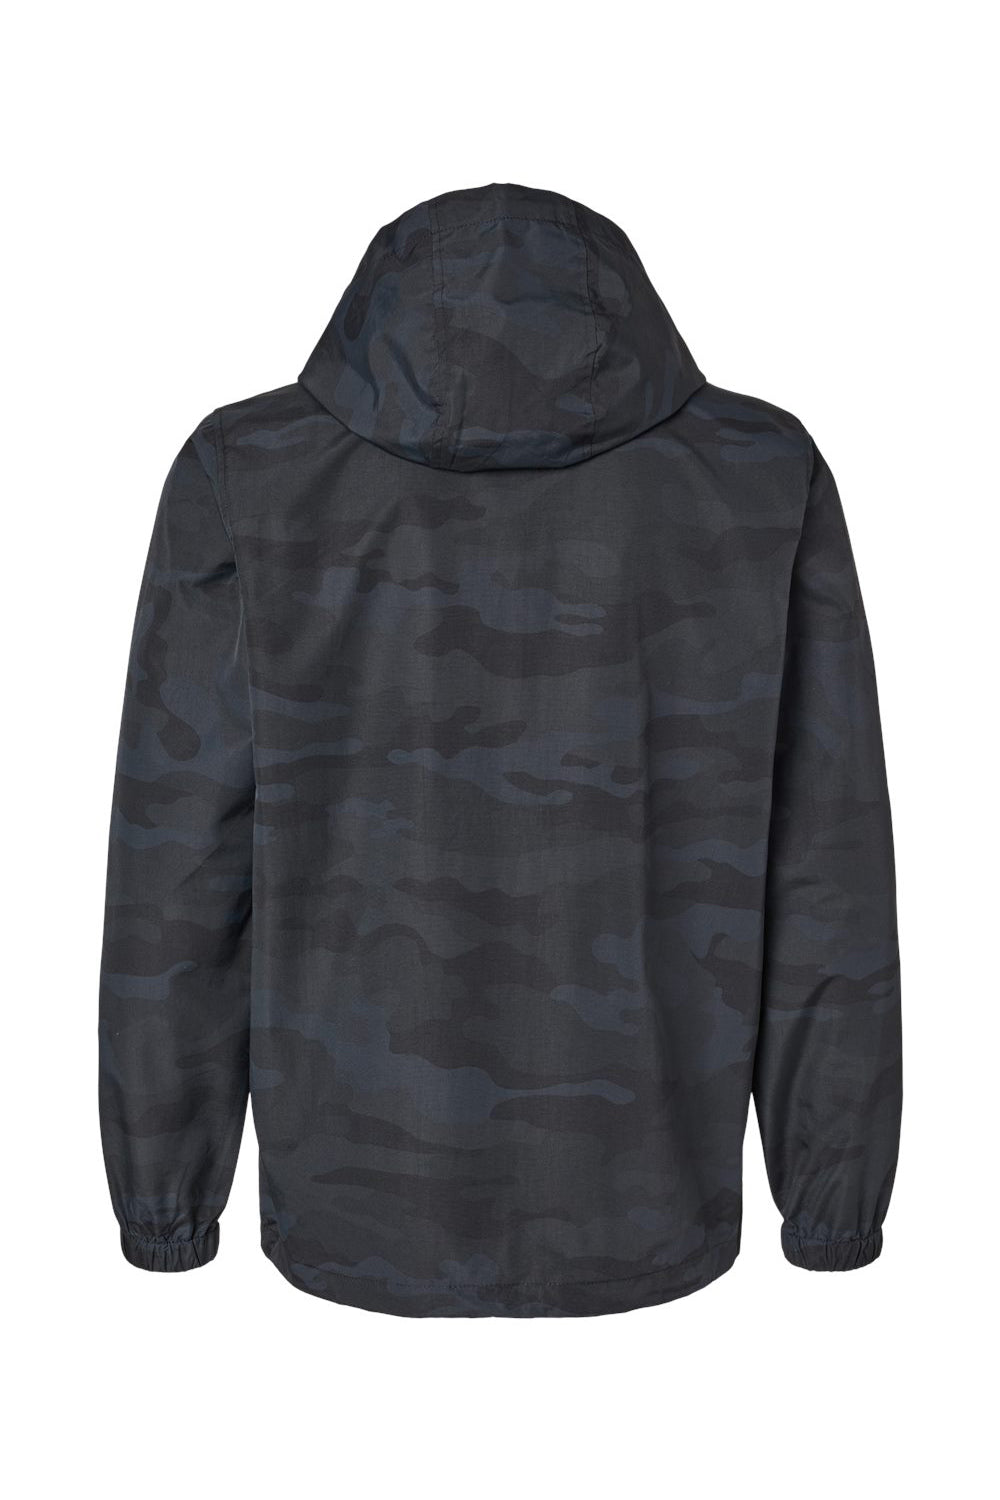 Independent Trading Co. EXP94NAW Mens Nylon Hooded Anorak Jacket Black Camo Flat Back